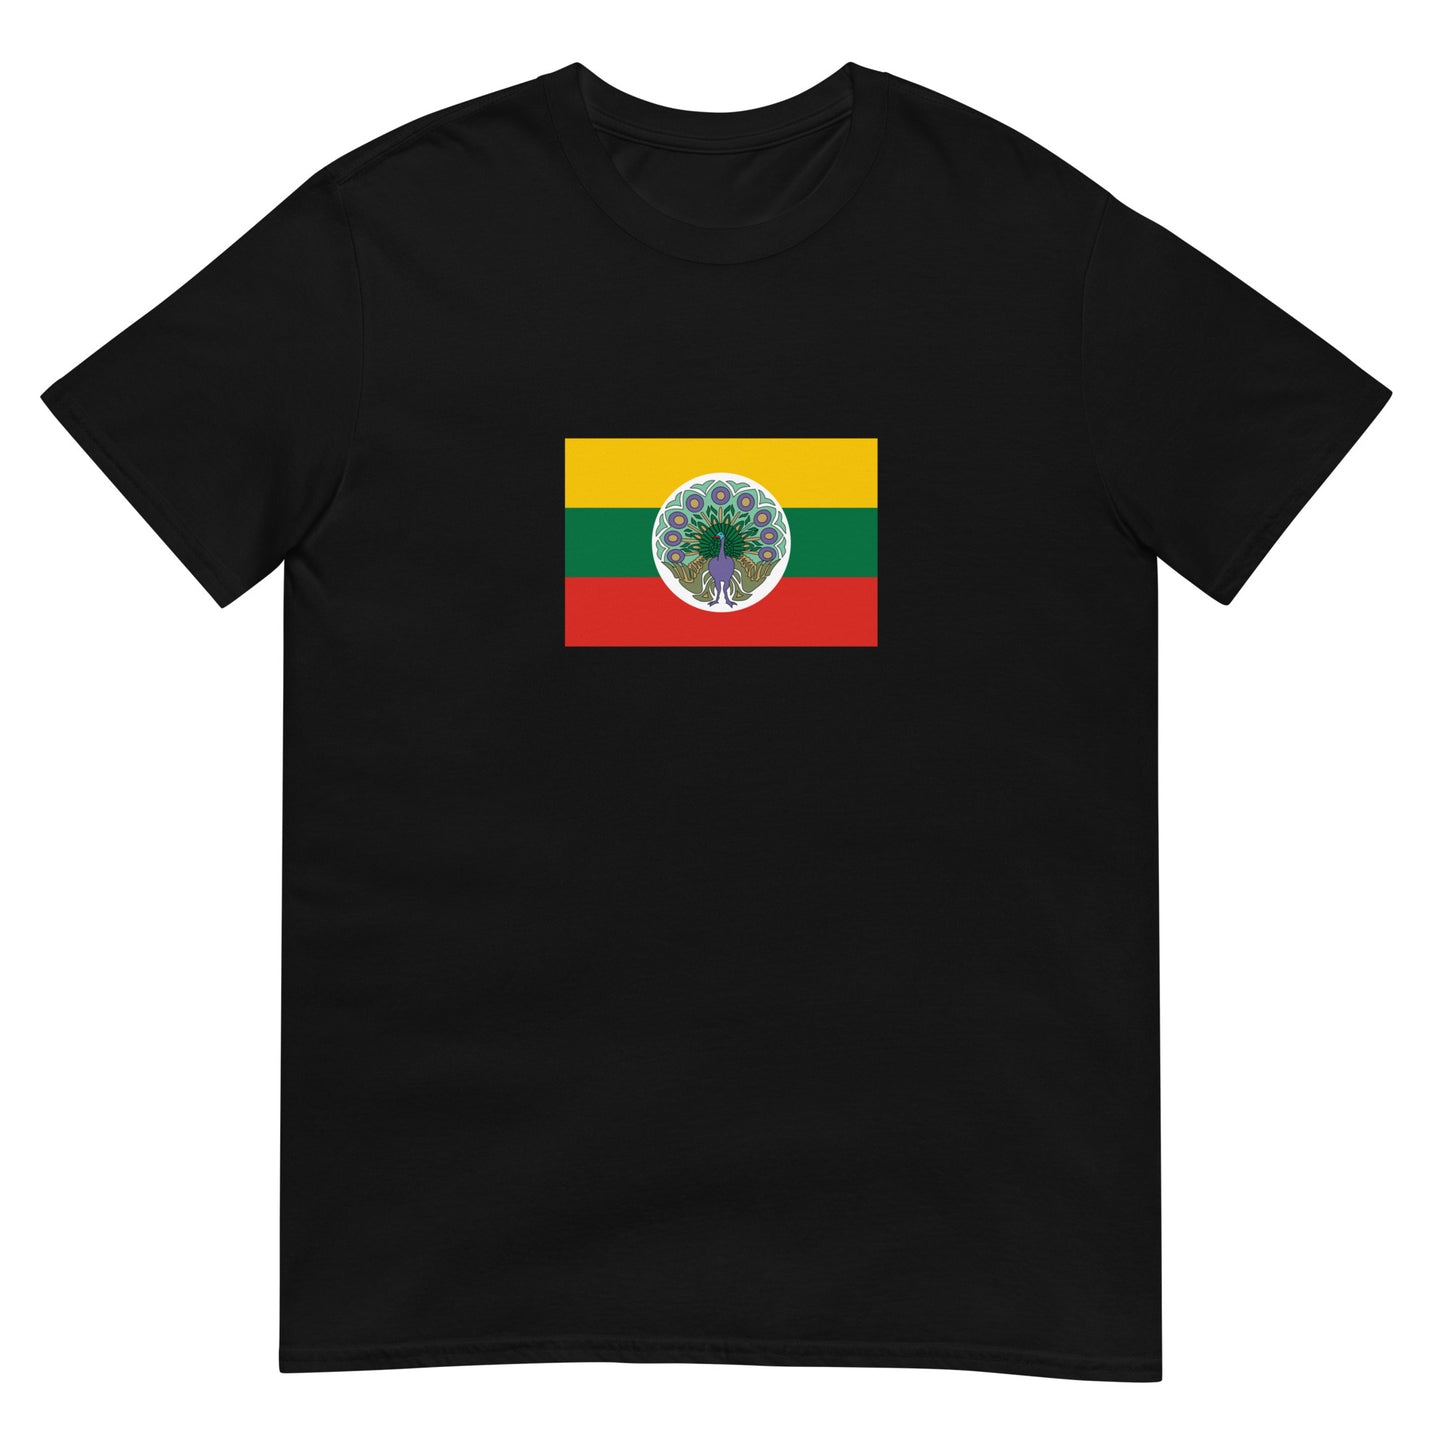 Myanmar (Burma) - State of Burma (1943-1945) | Historical Flag Short-Sleeve Unisex T-Shirt